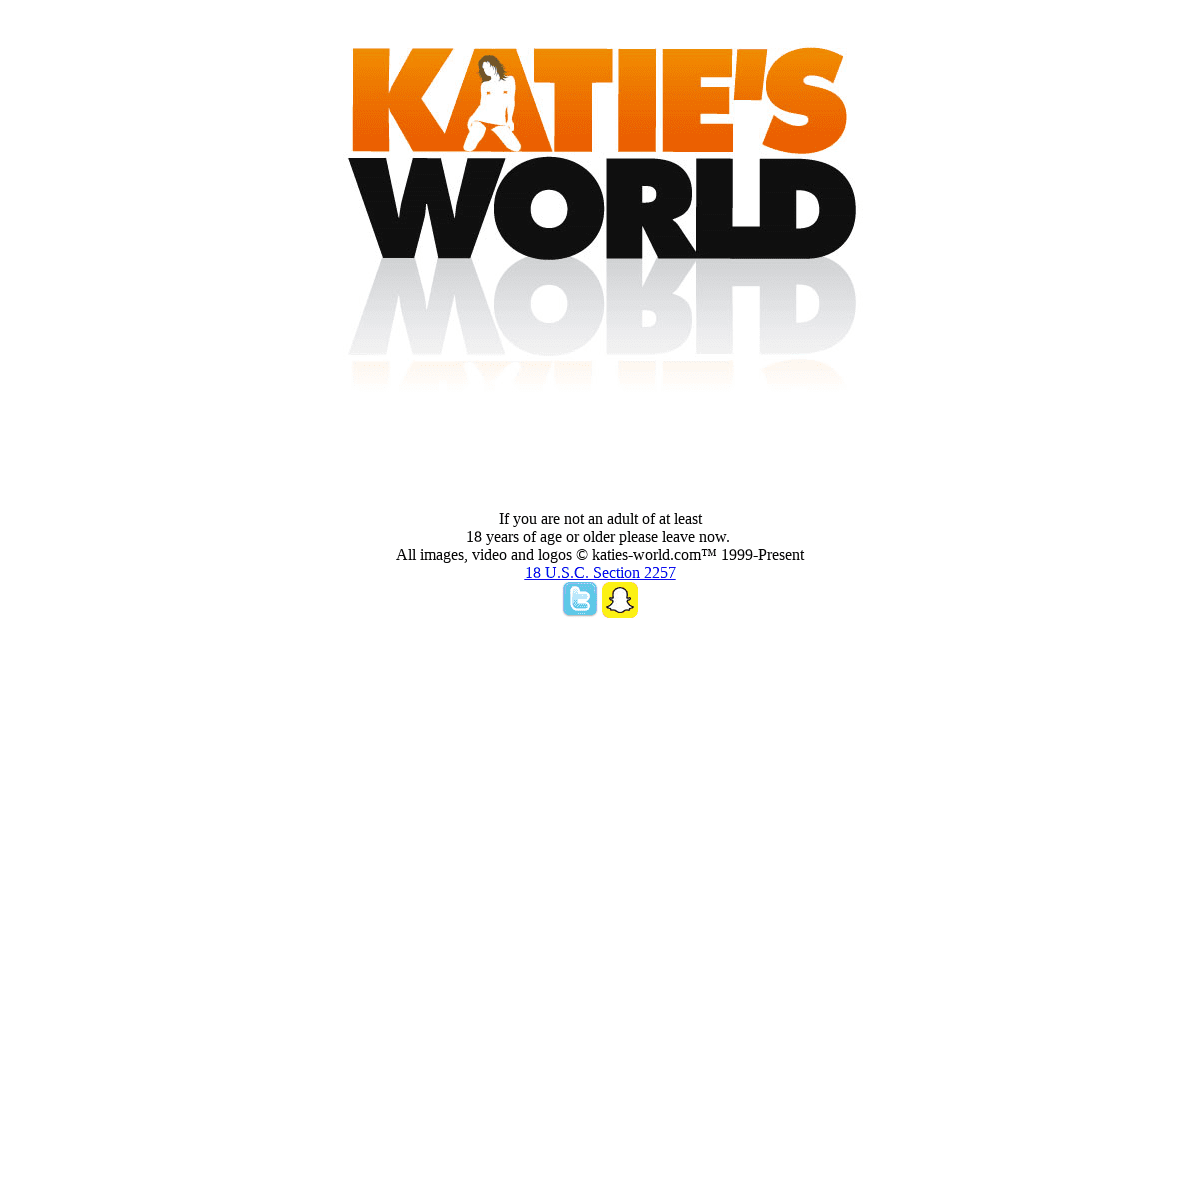 Katies-World.com